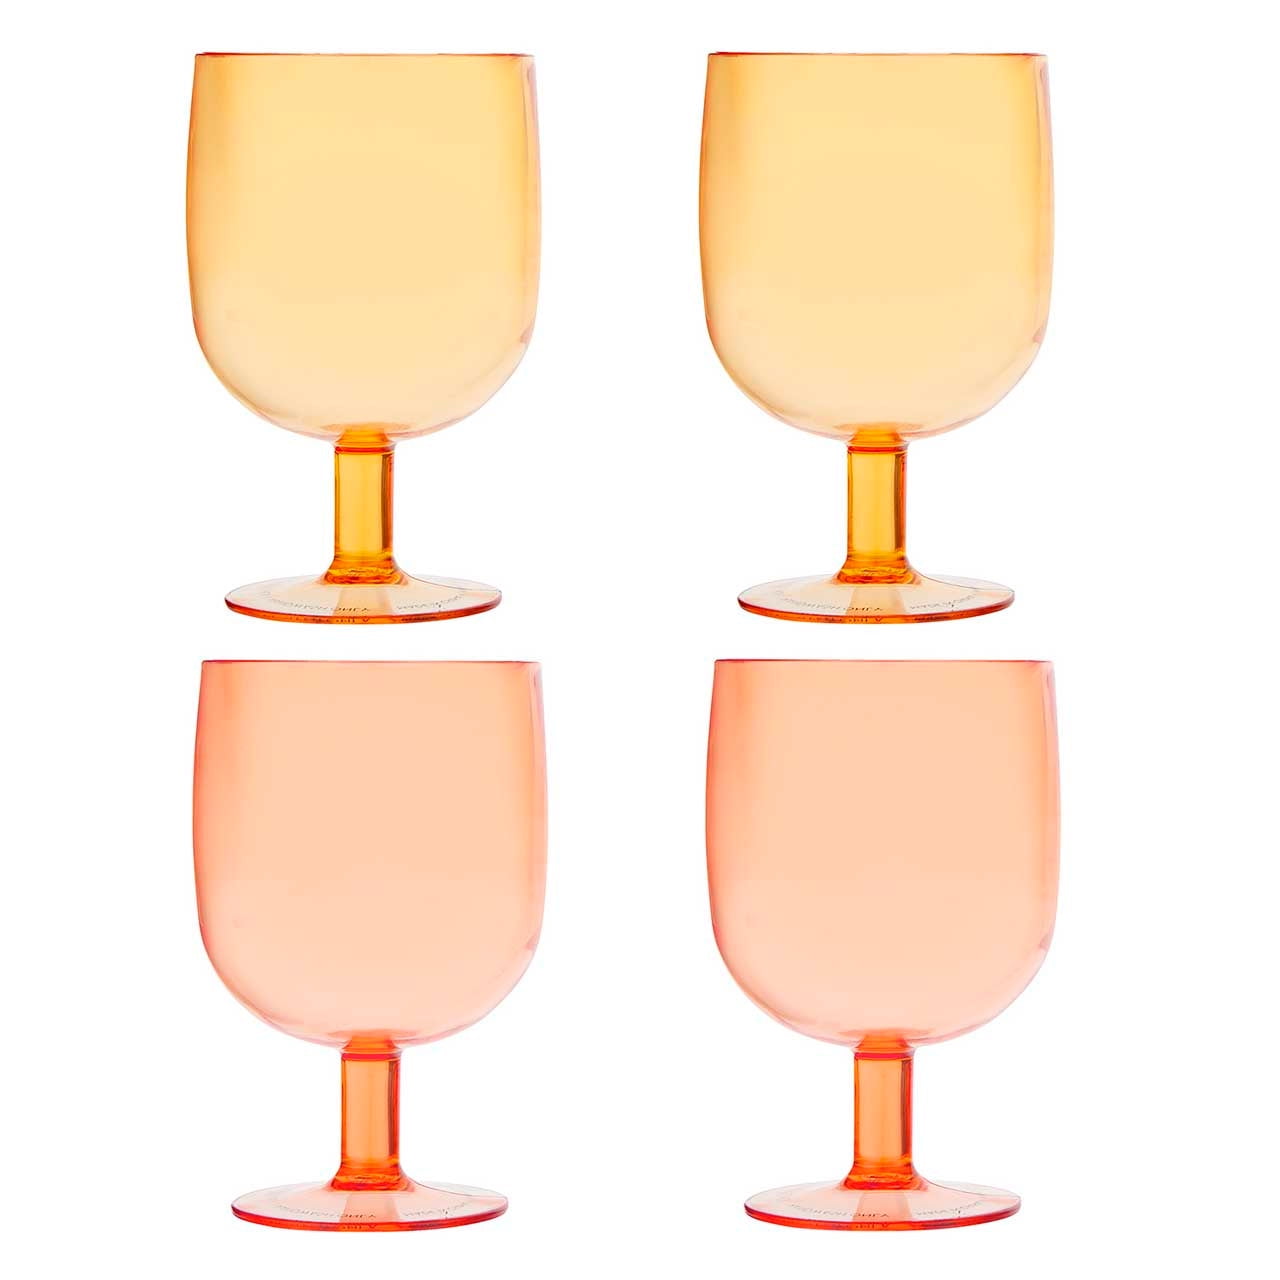 OSQI Metallic Gold Color Acrylic Wine Glasses Set of 4 (12oz), Premium  Quality Unbreakable Stemmed Acrylic Wine Glasses for All Purpose Red or  White Wine